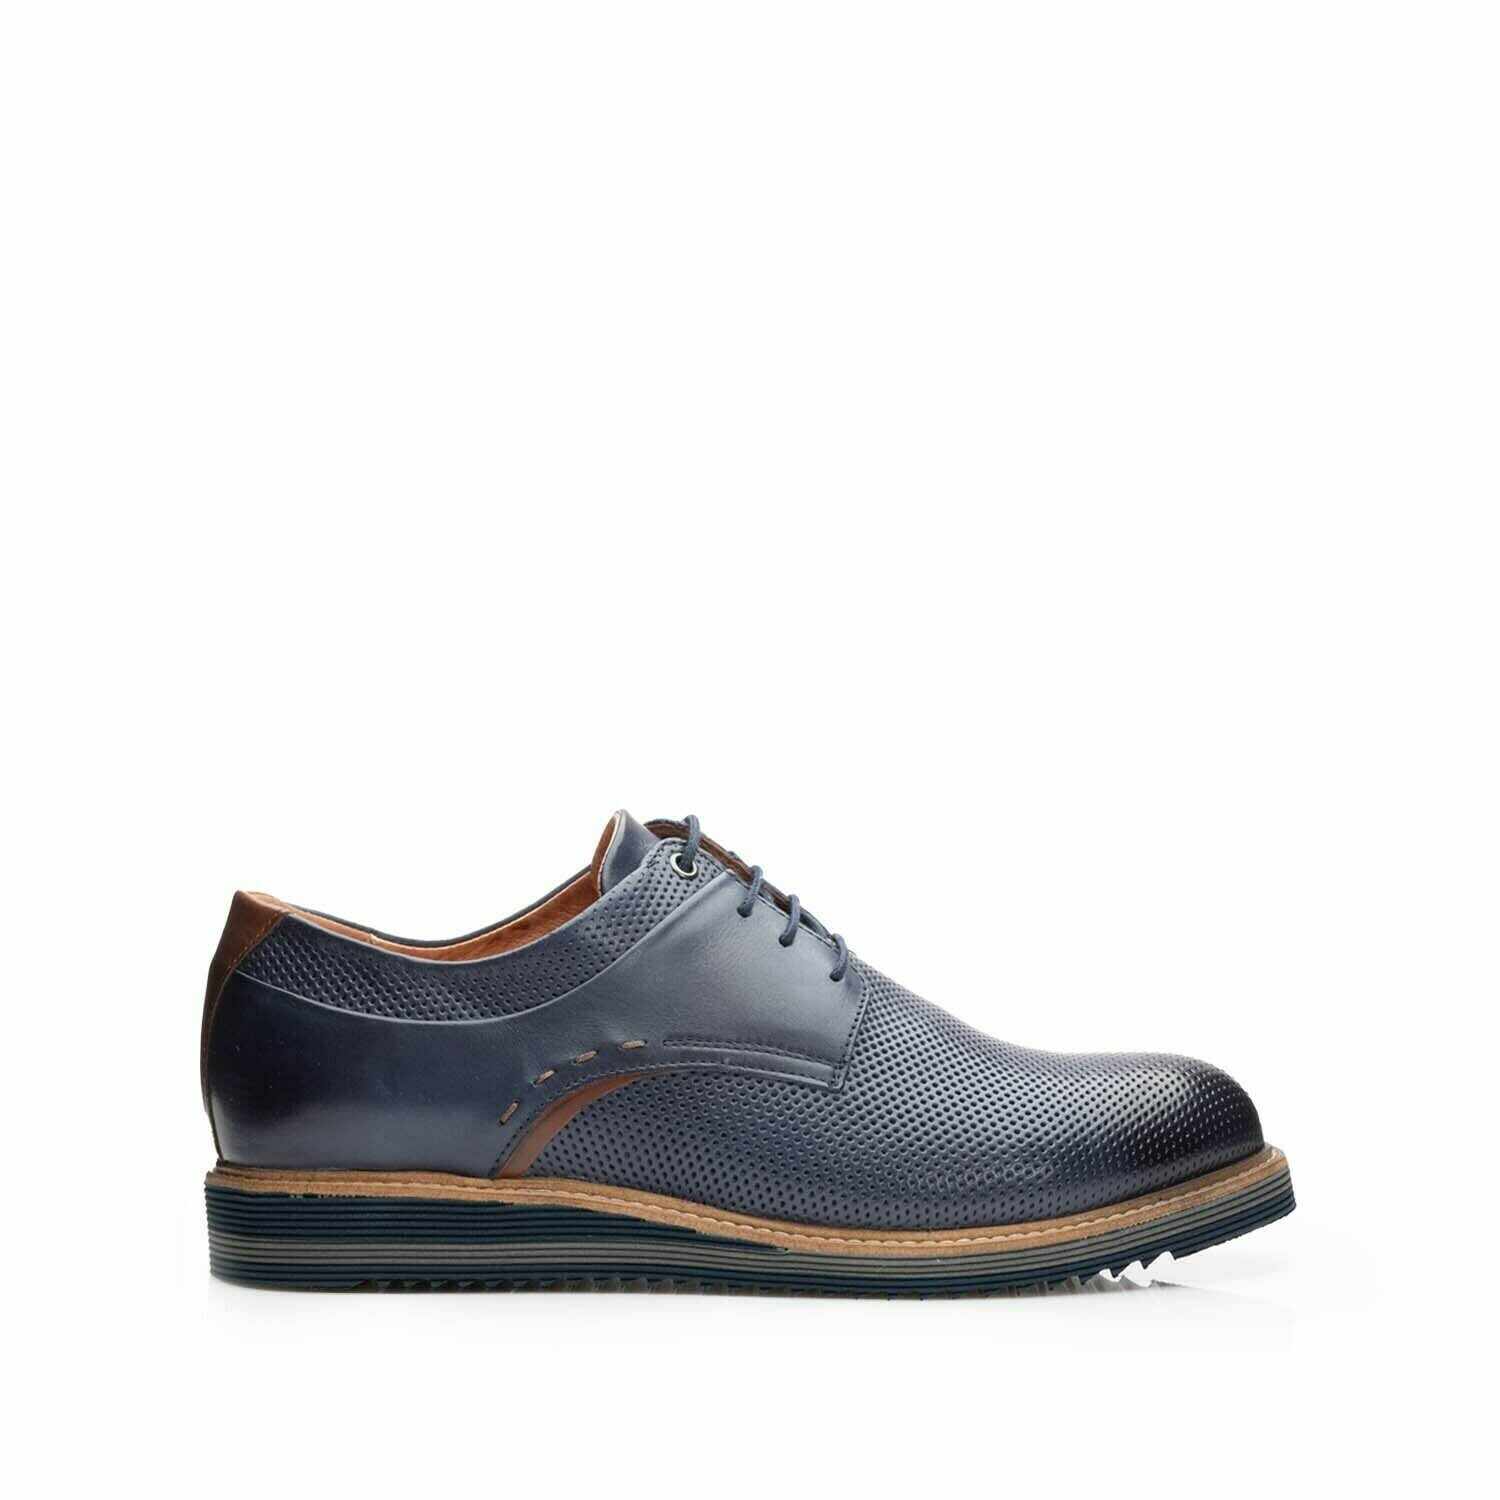 Pantofi casual barbati din piele naturala,Leofex-592-1 Blue Box